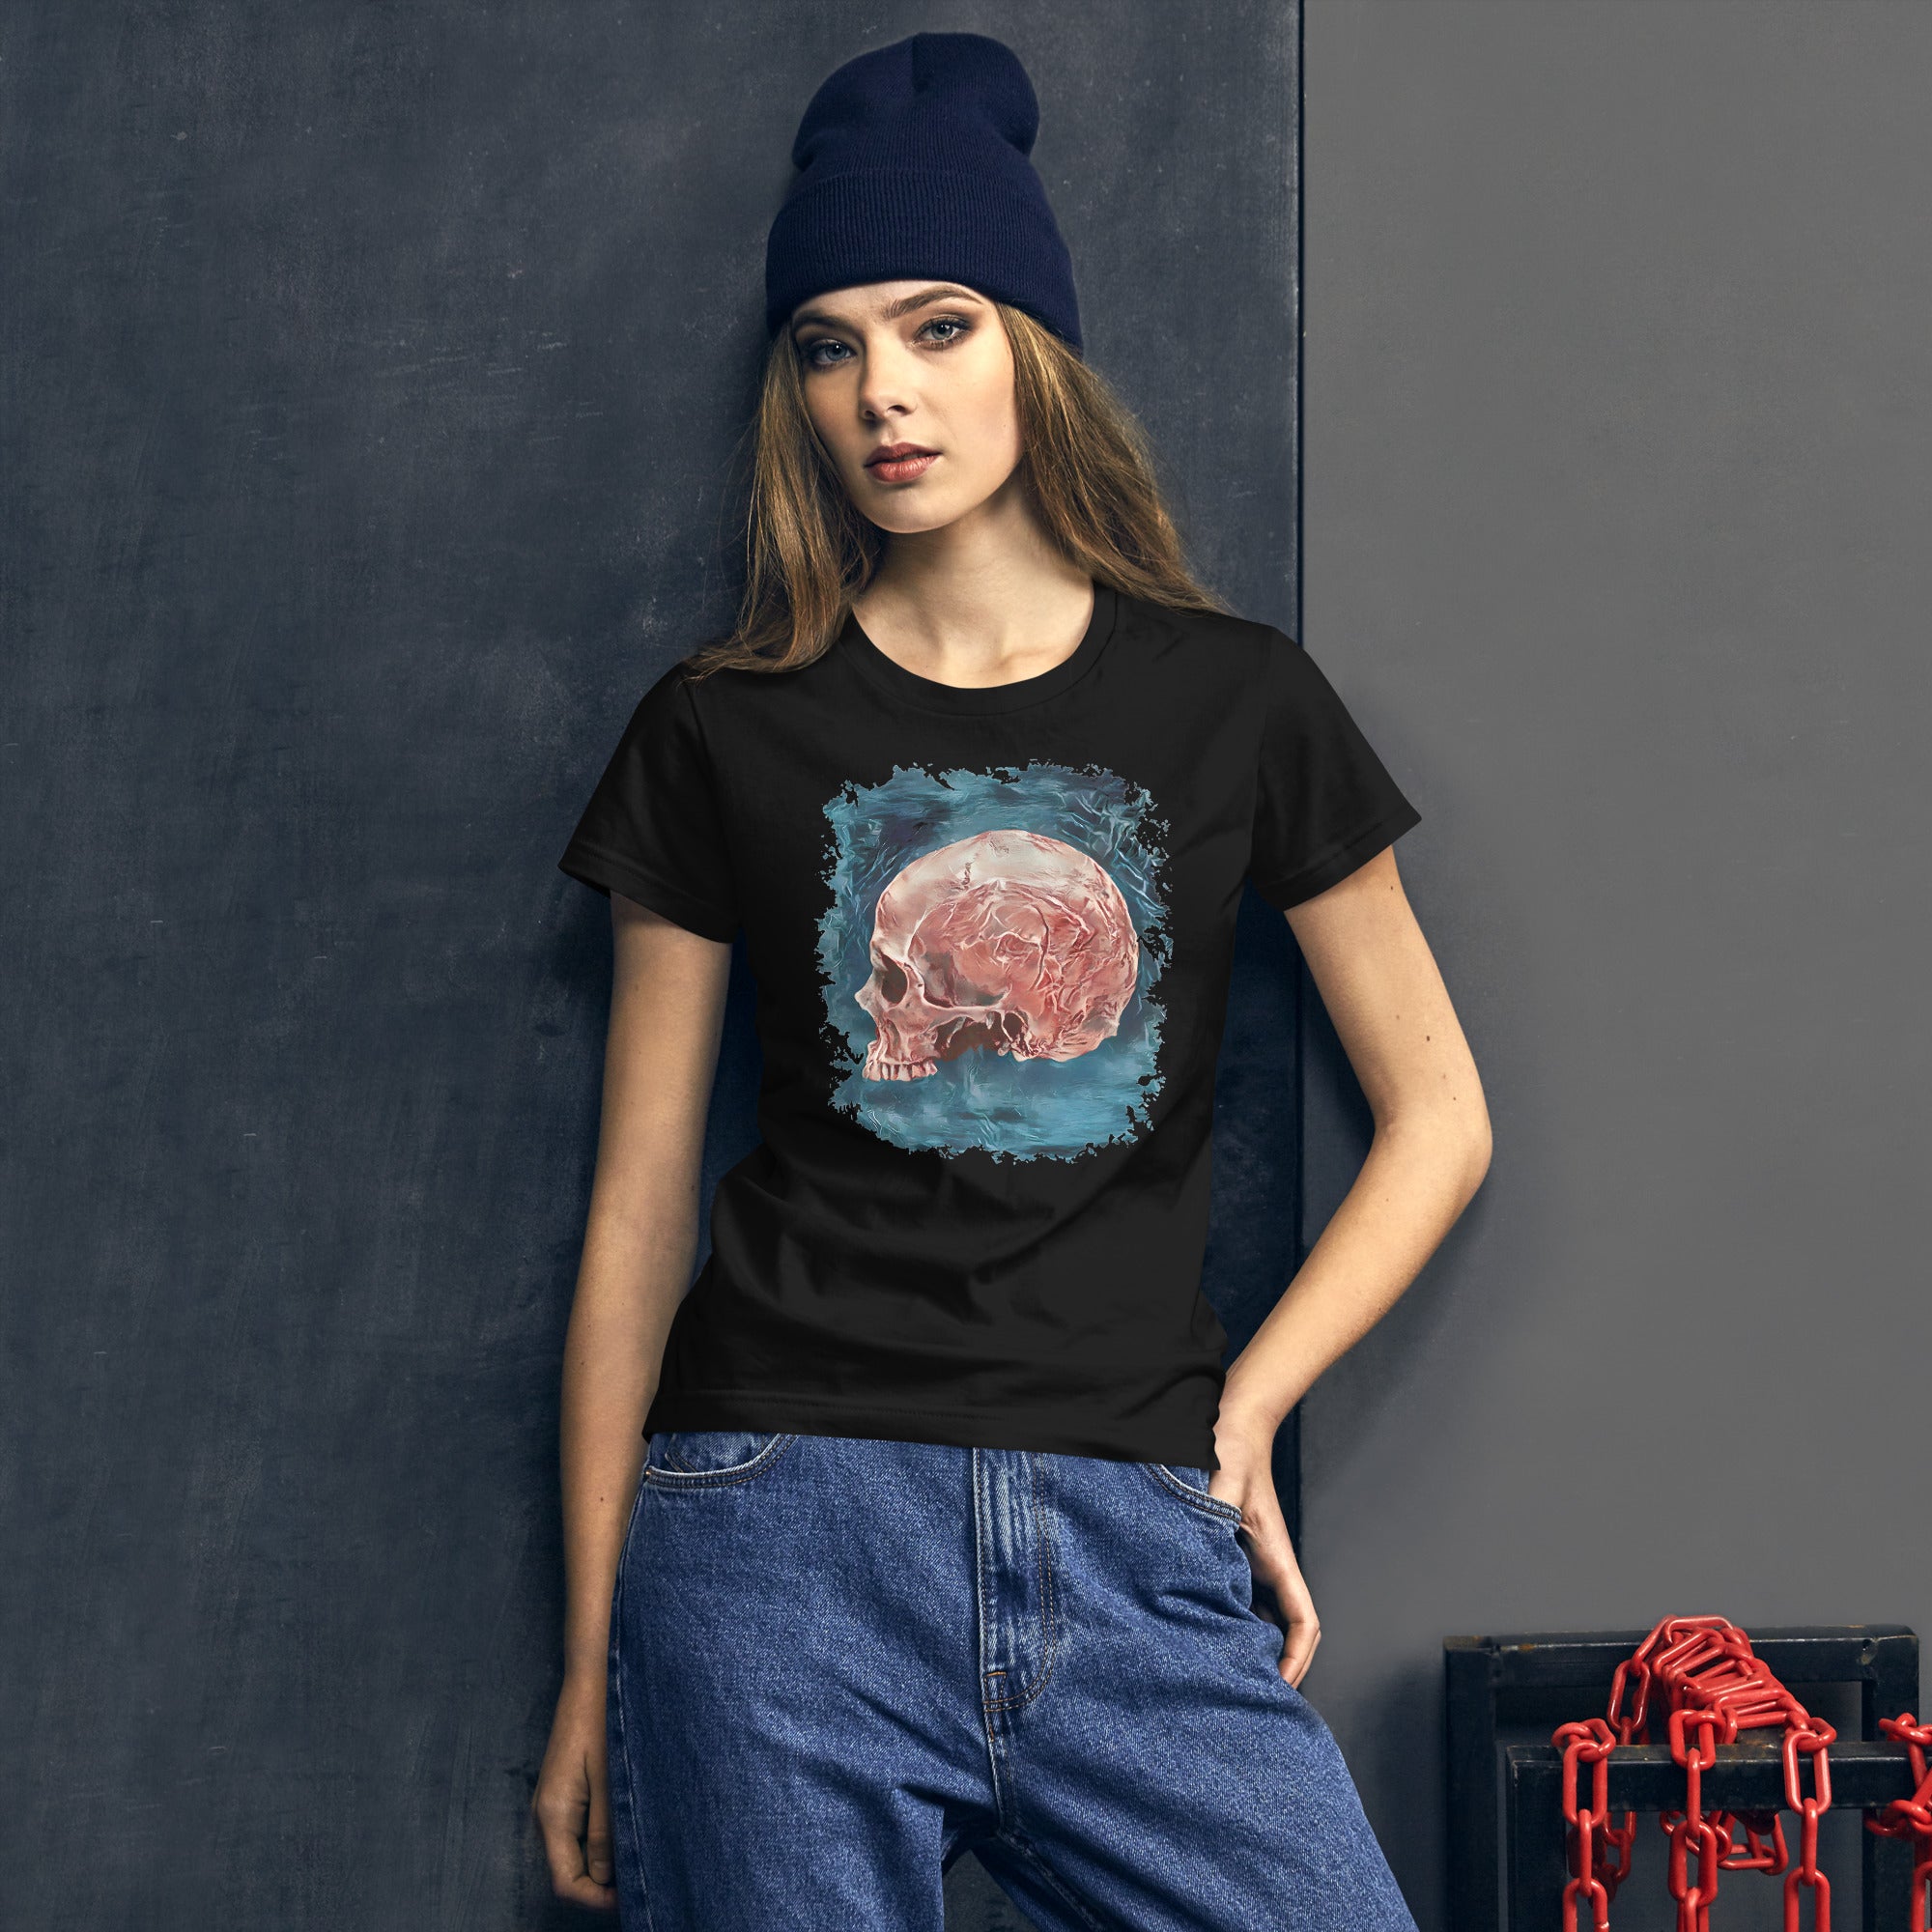 Side of Mystical Blood Skull Voodoo Goth Fashion Women's Short Sleeve Babydoll T-shirt